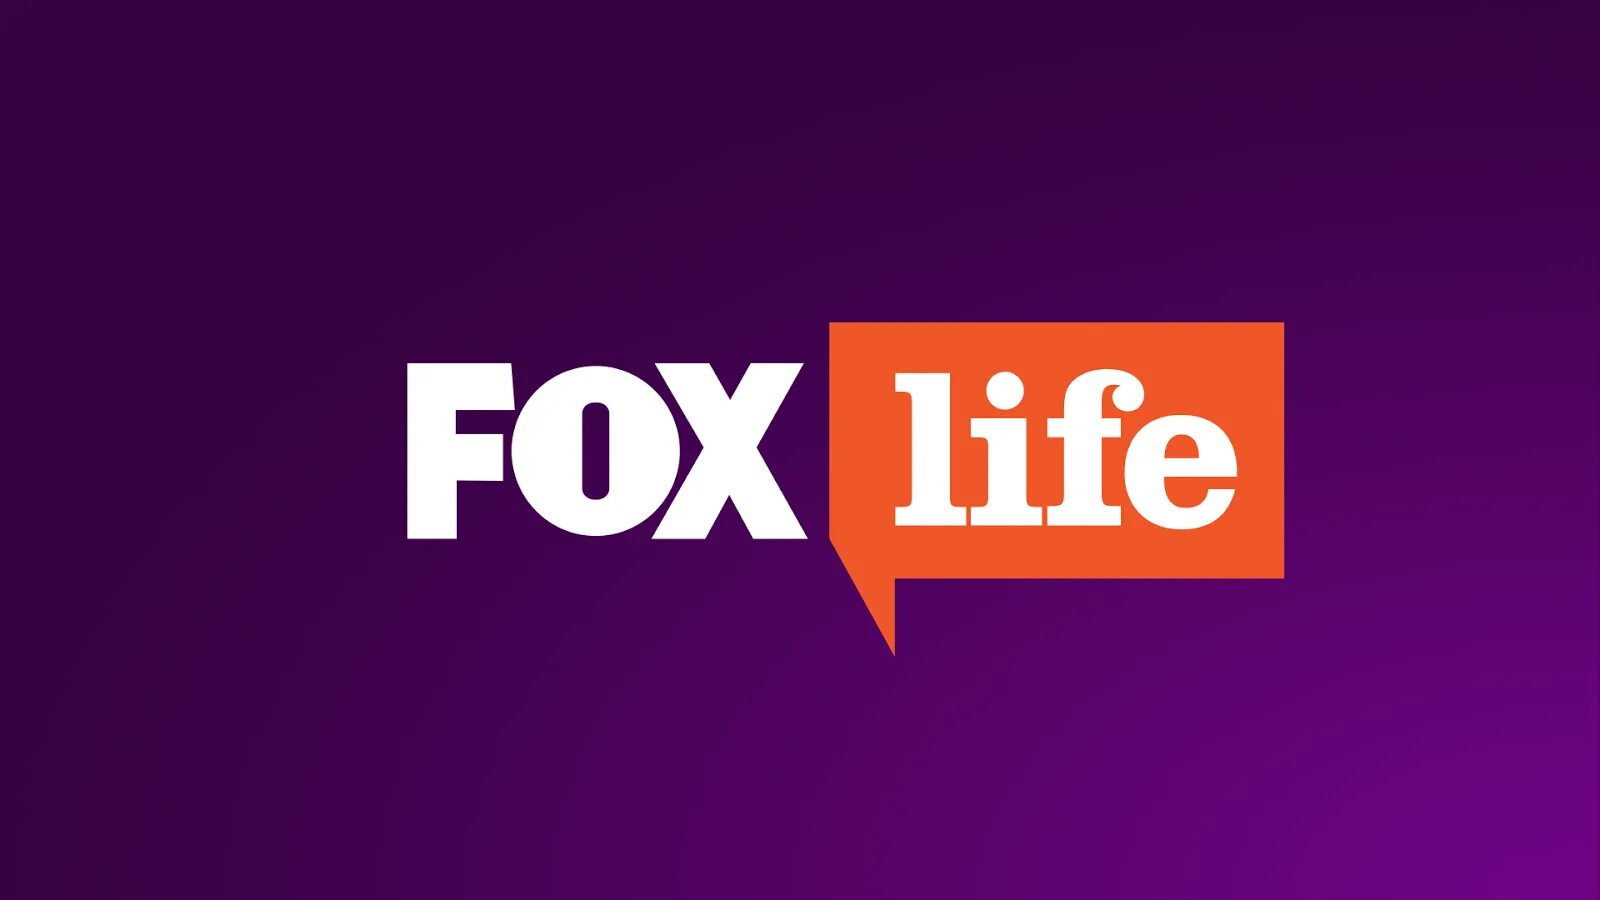 Life more tv. Логотипы телеканалов. Телеканал Fox Life. Логотип канала Фокс.